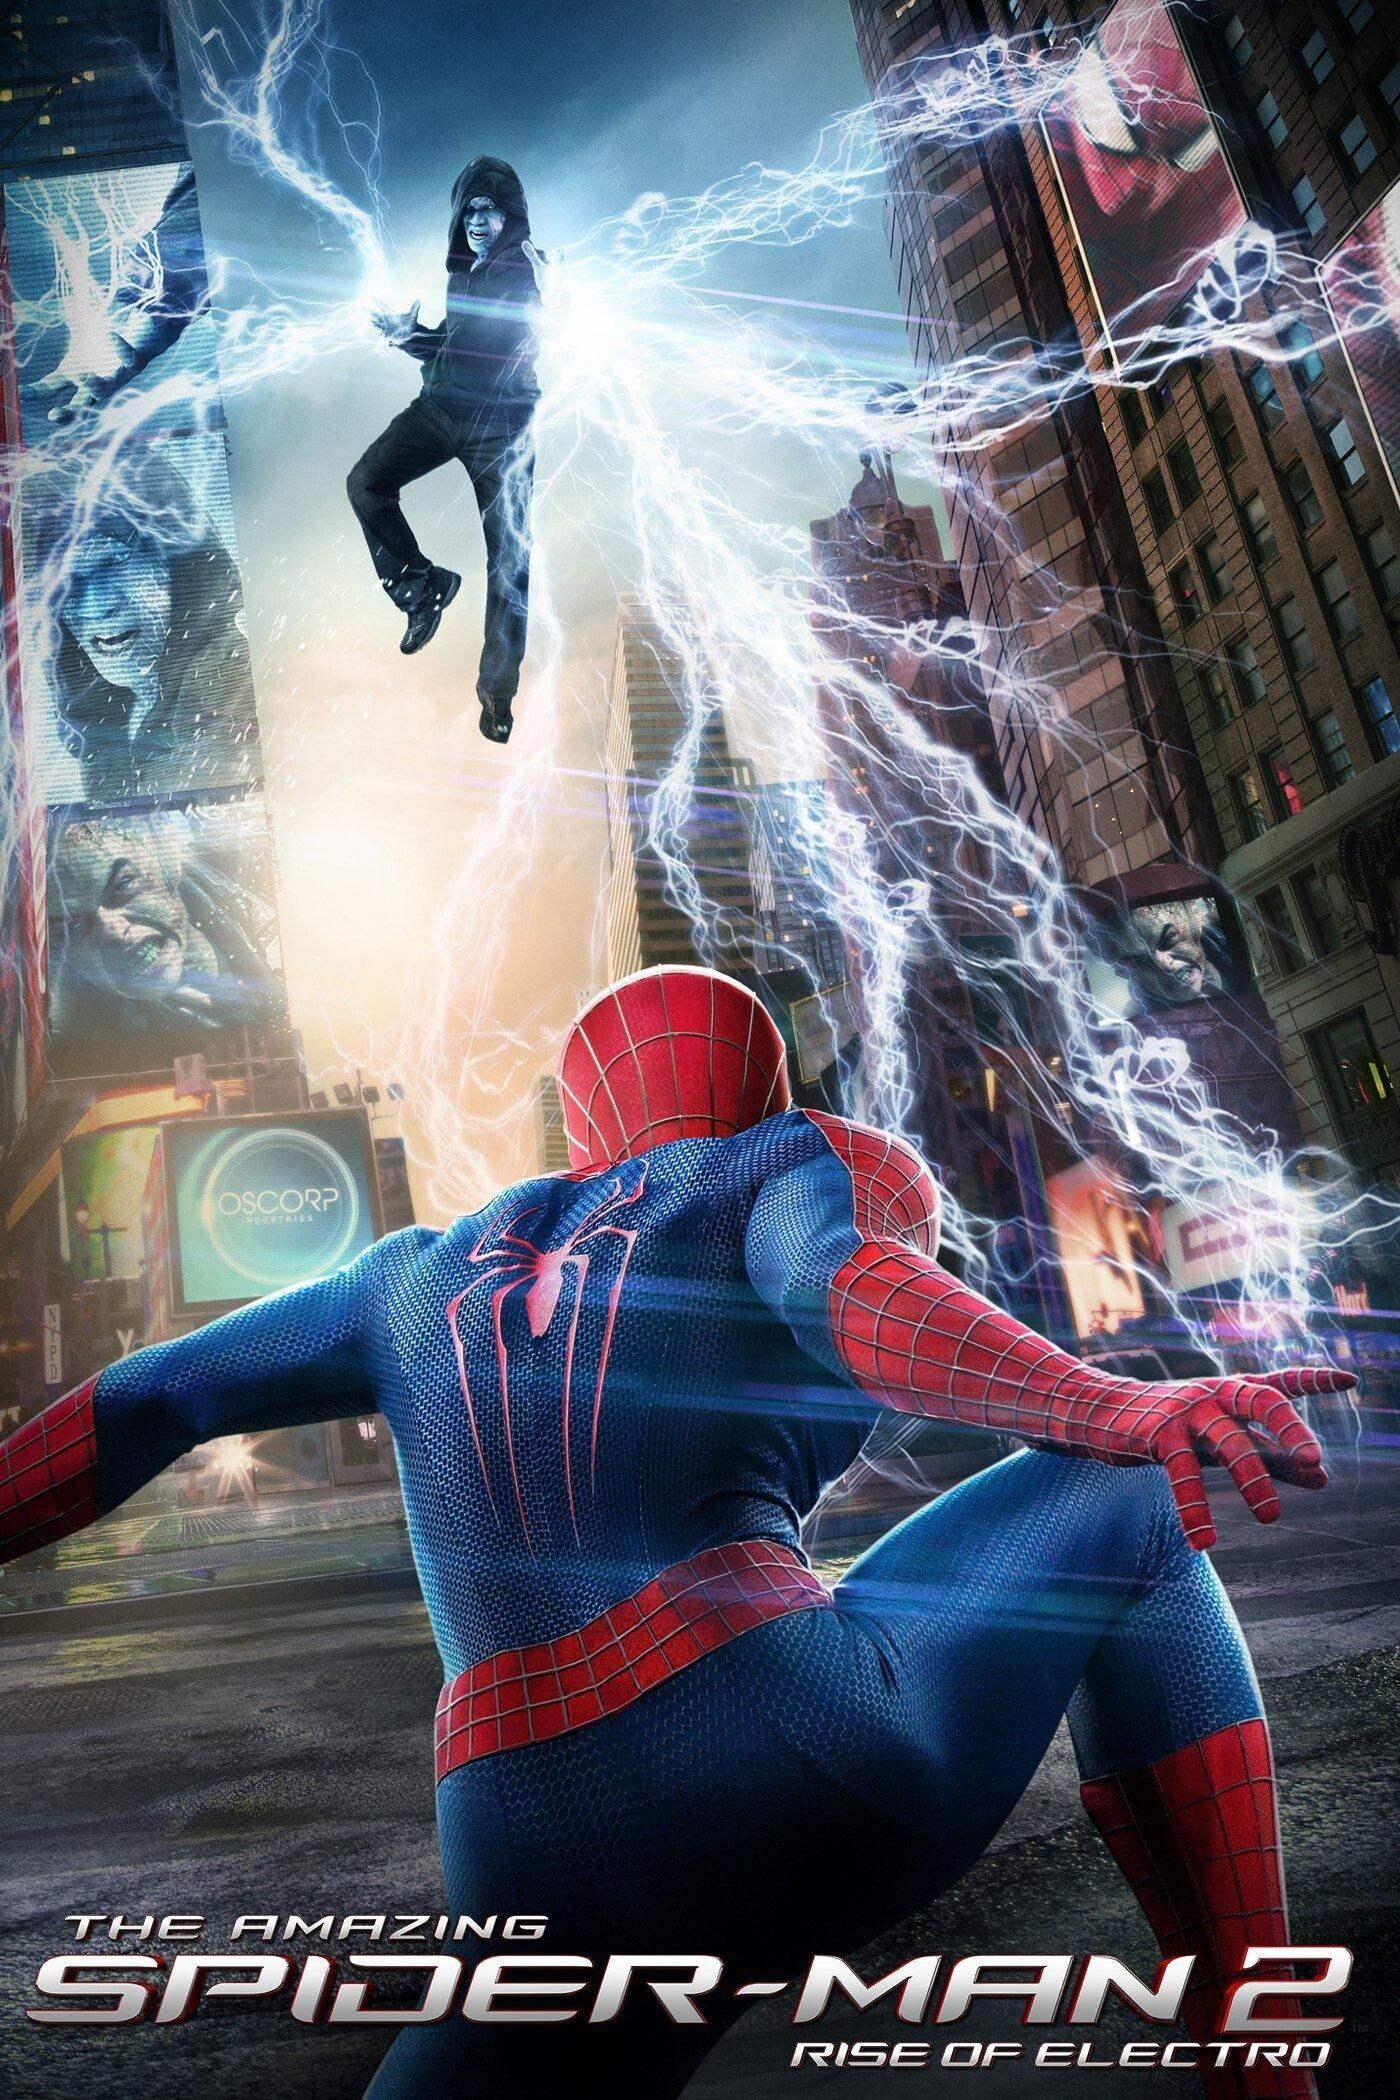 The Amazing Spider-Man 2 (2014) Movie Information & Trailers | KinoCheck